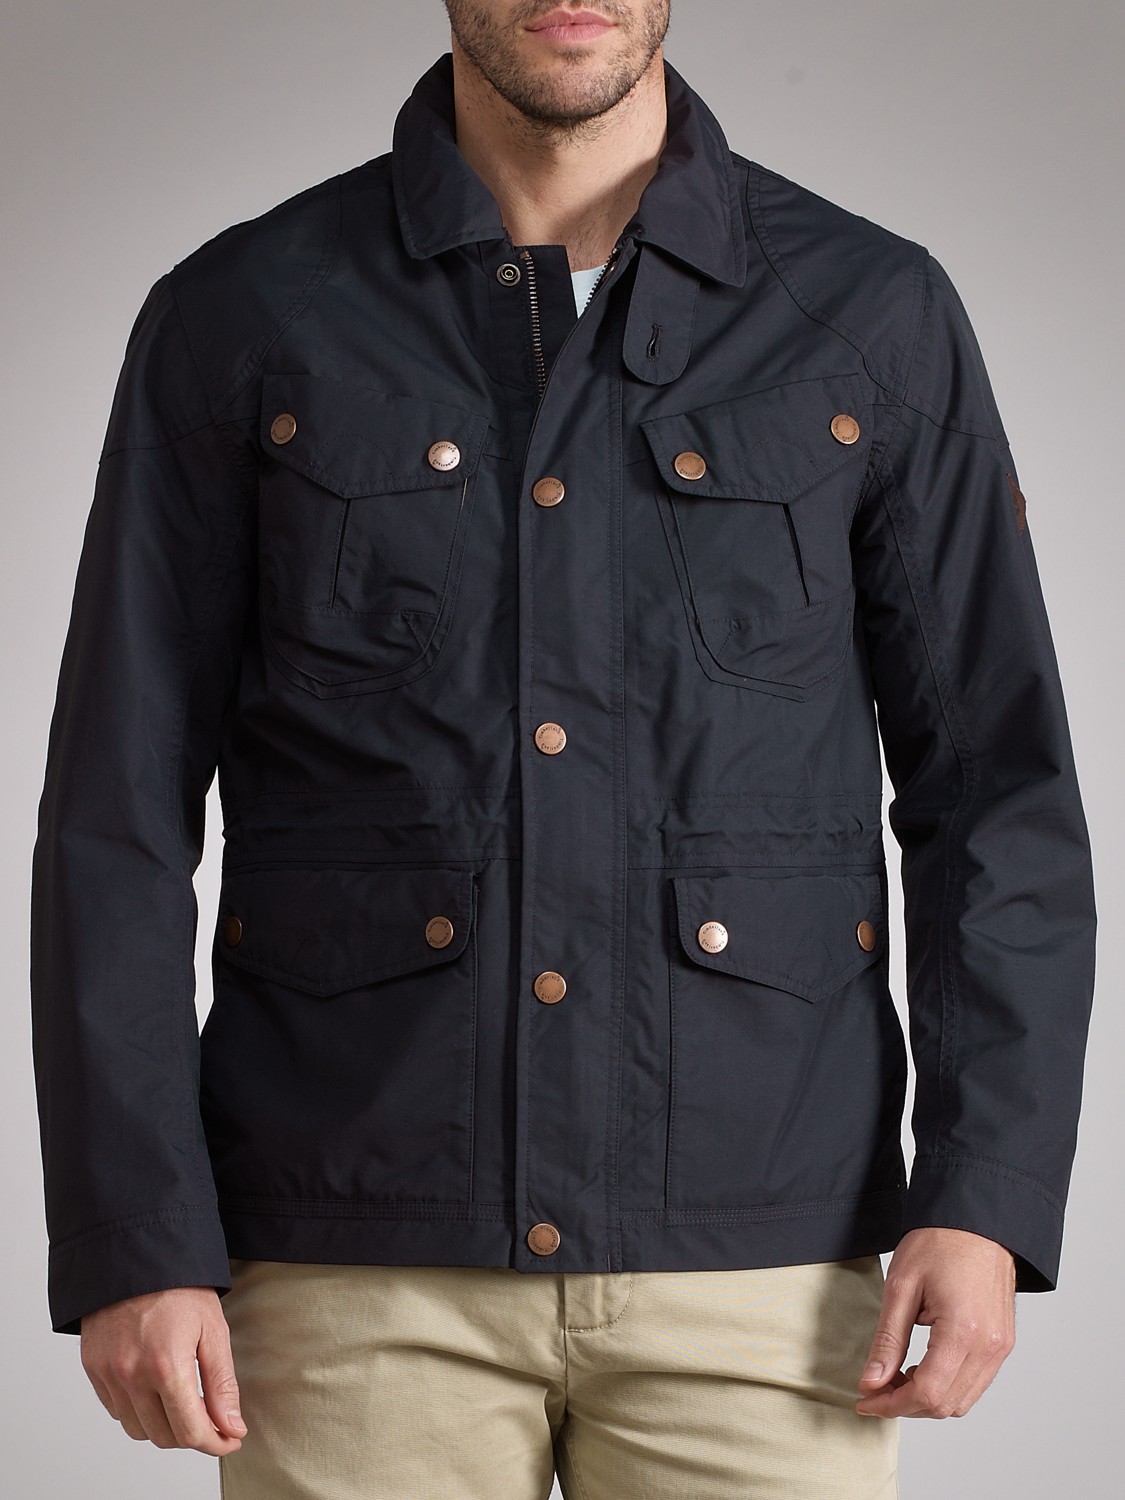 timberland waxed jacket